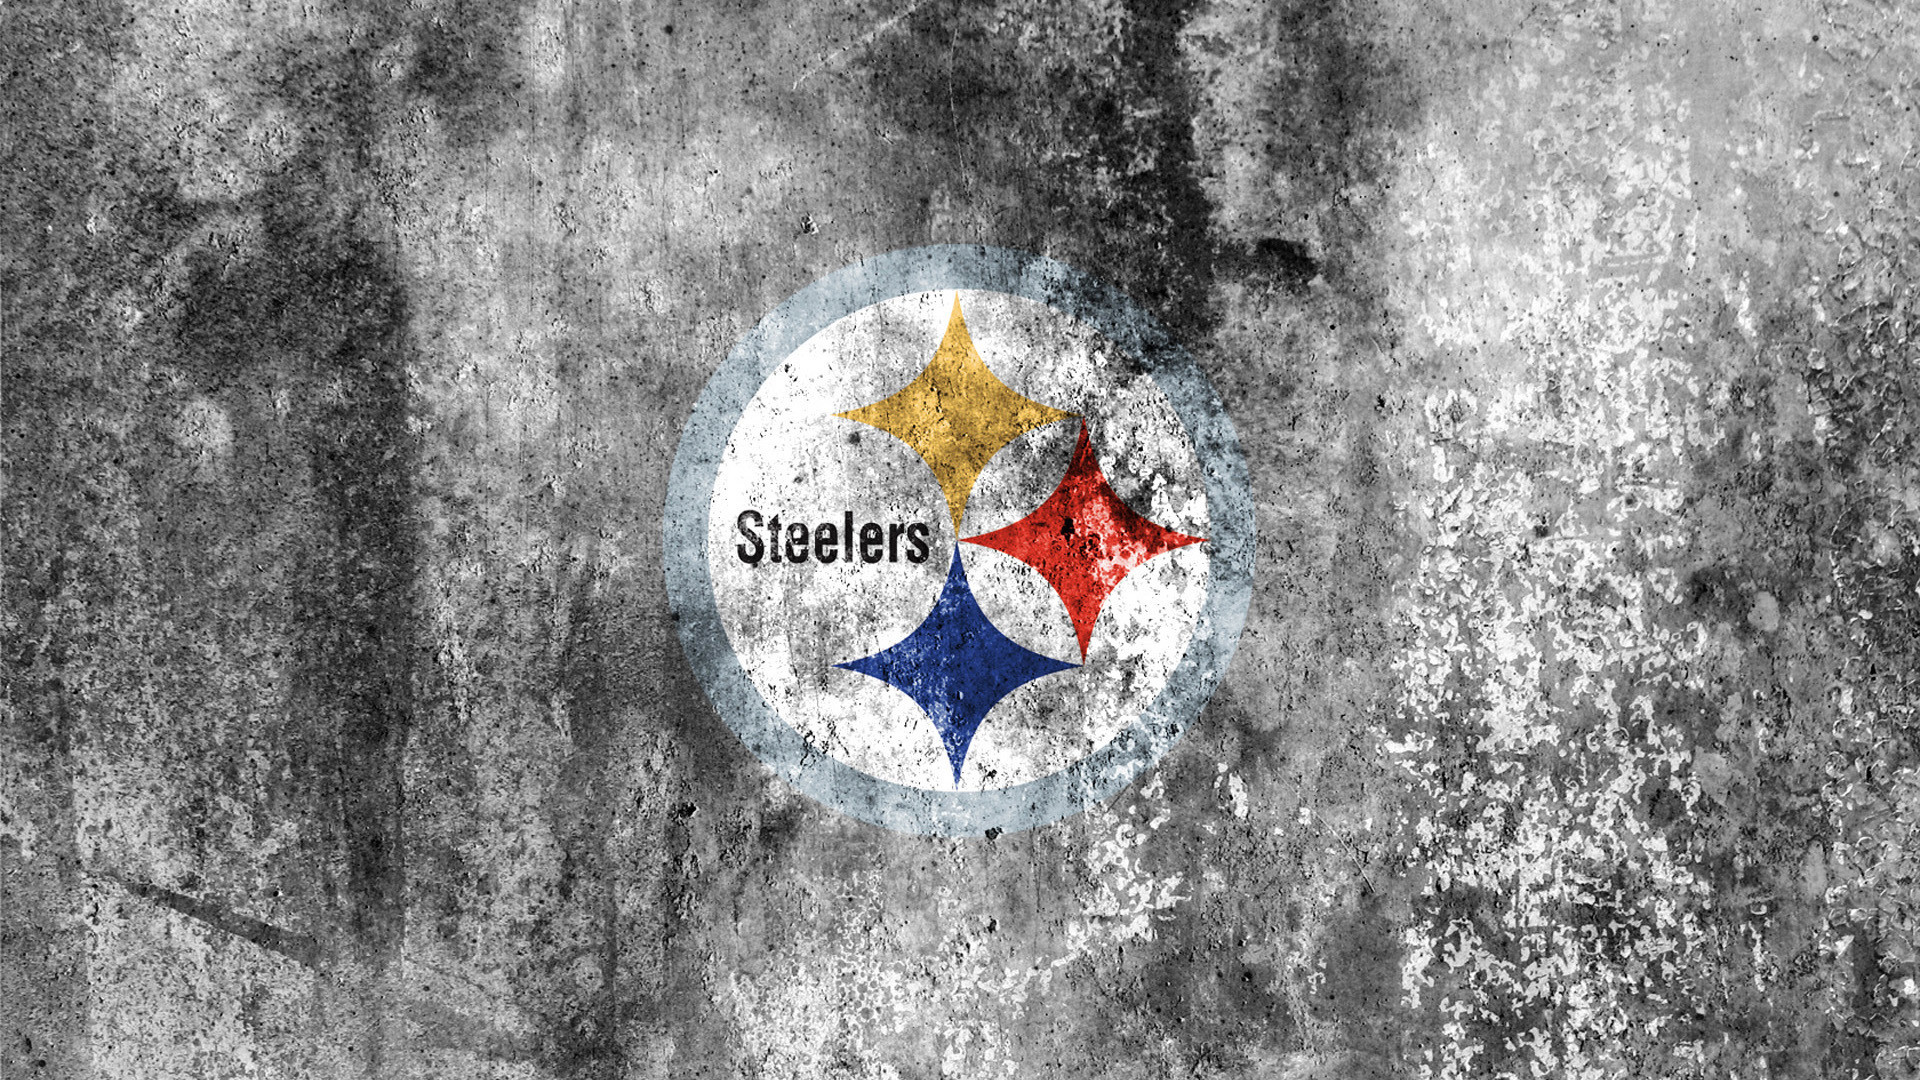 1920x1080 1920x1200 Pittsburgh Steelers Wallpaper On Pinterest Pittsburgh Steelers  Source ÃÂ· Pittsburgh Steelers Football Wallpapers